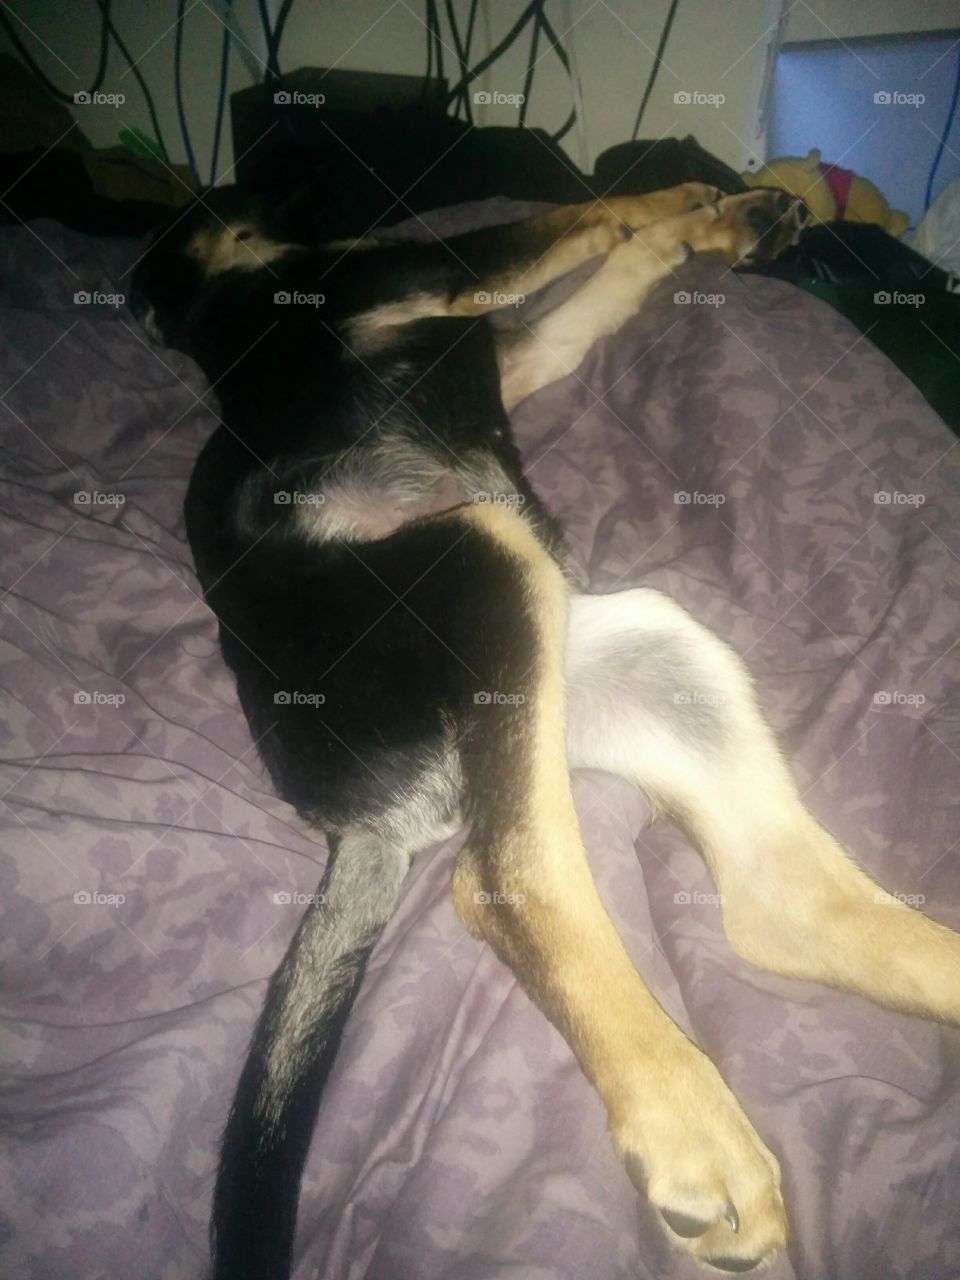 Kika stretching out